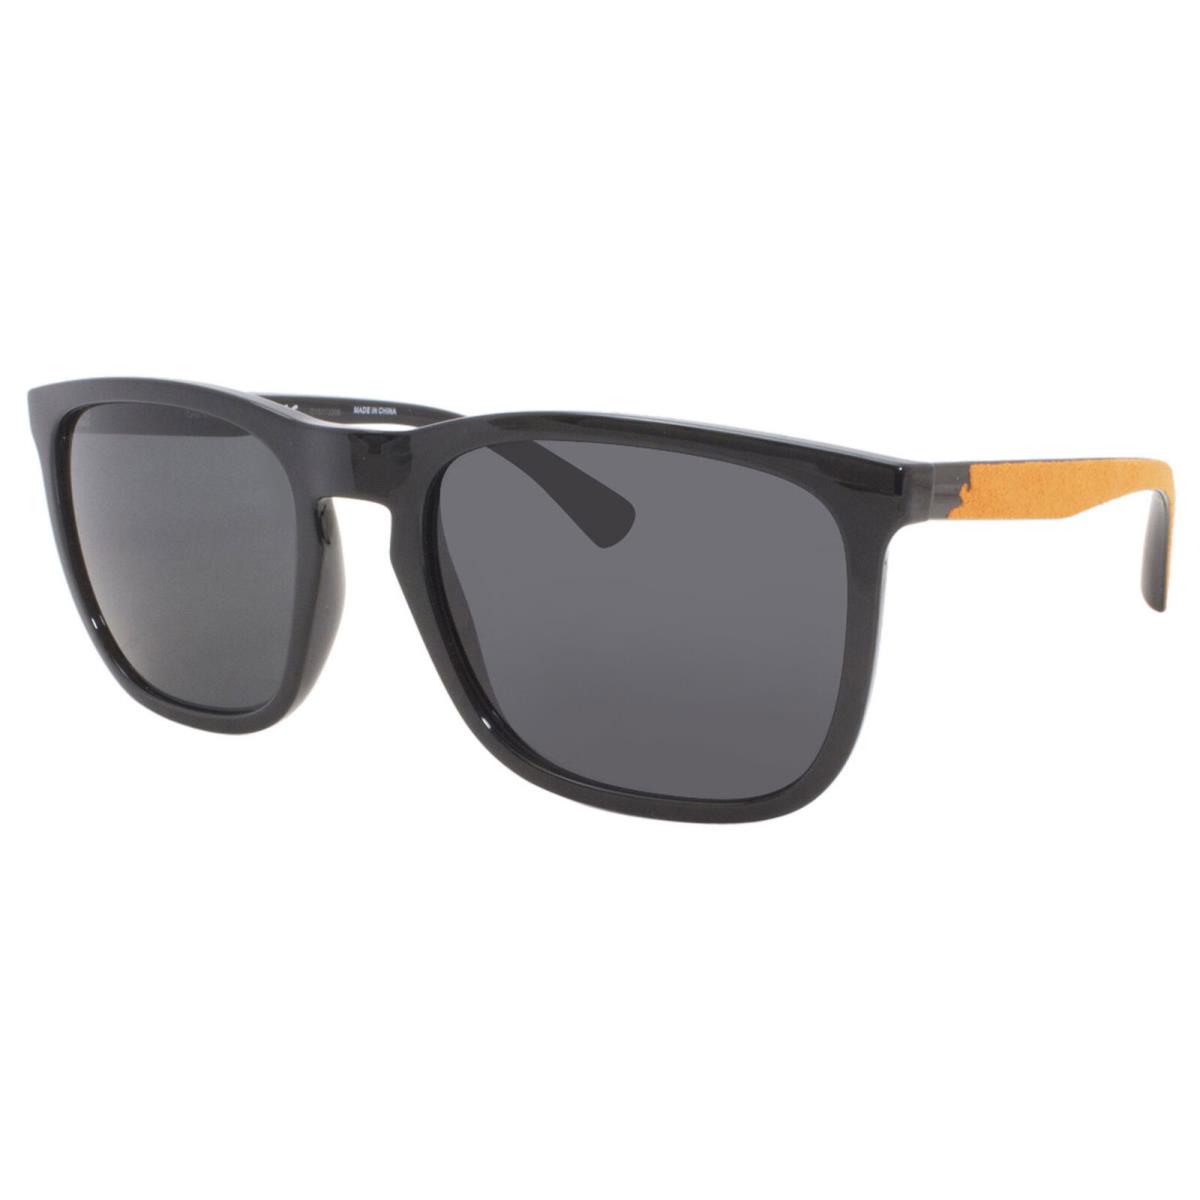 Emporio Armani EA4132 5017/87 Sunglasses Men`s Black-orange/grey Lenses 57mm